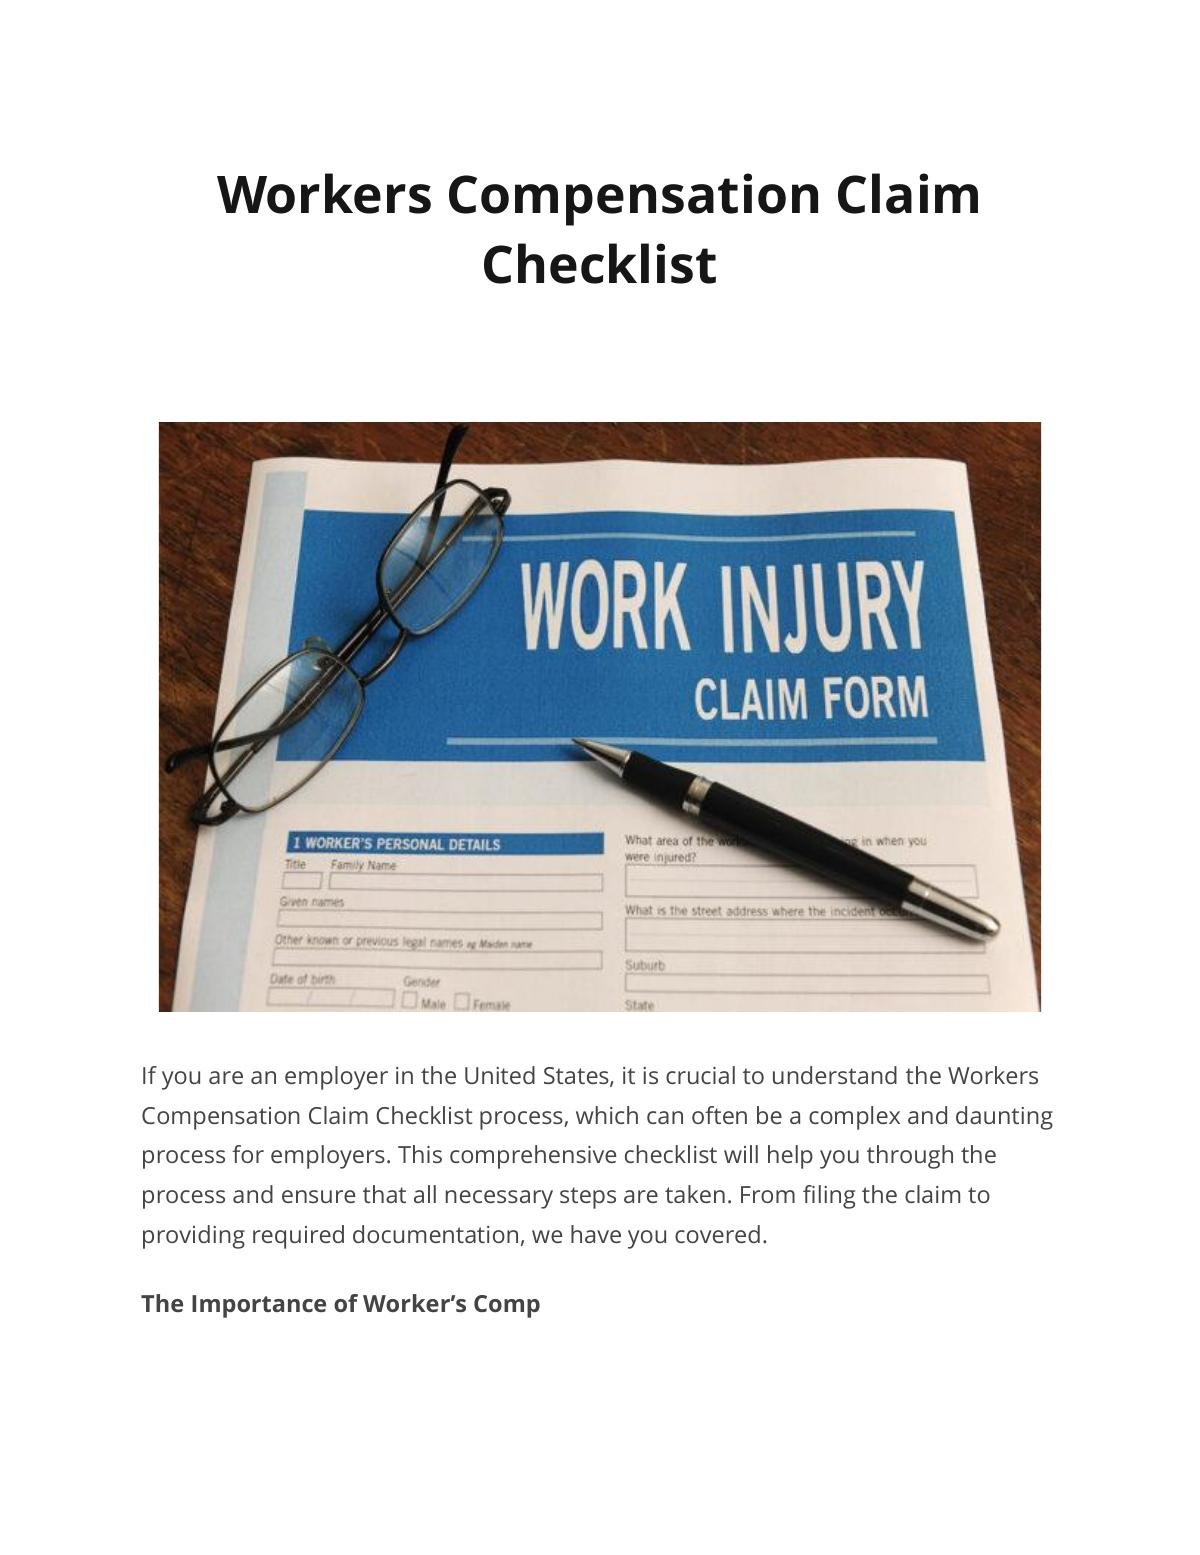 Workers Compensation Claim Checklist 